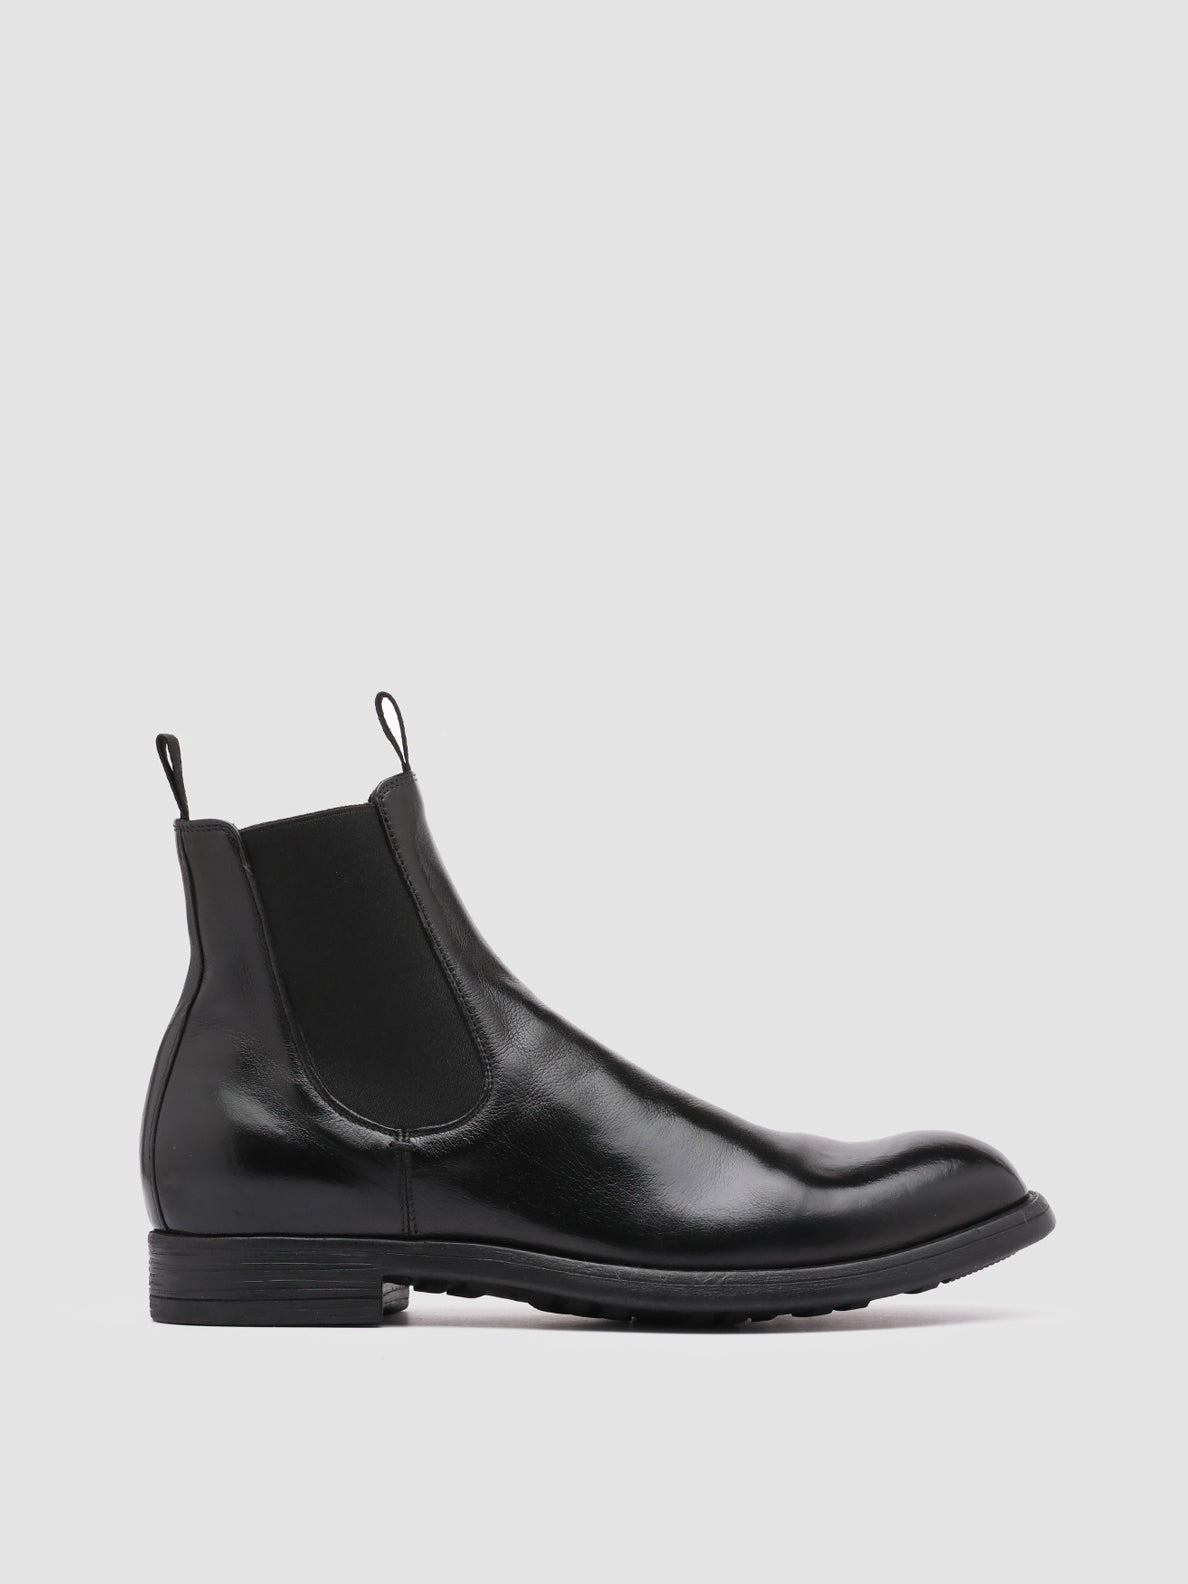 Men's Black Leather Boots CHRONICLE 002 – Officine Creative EU